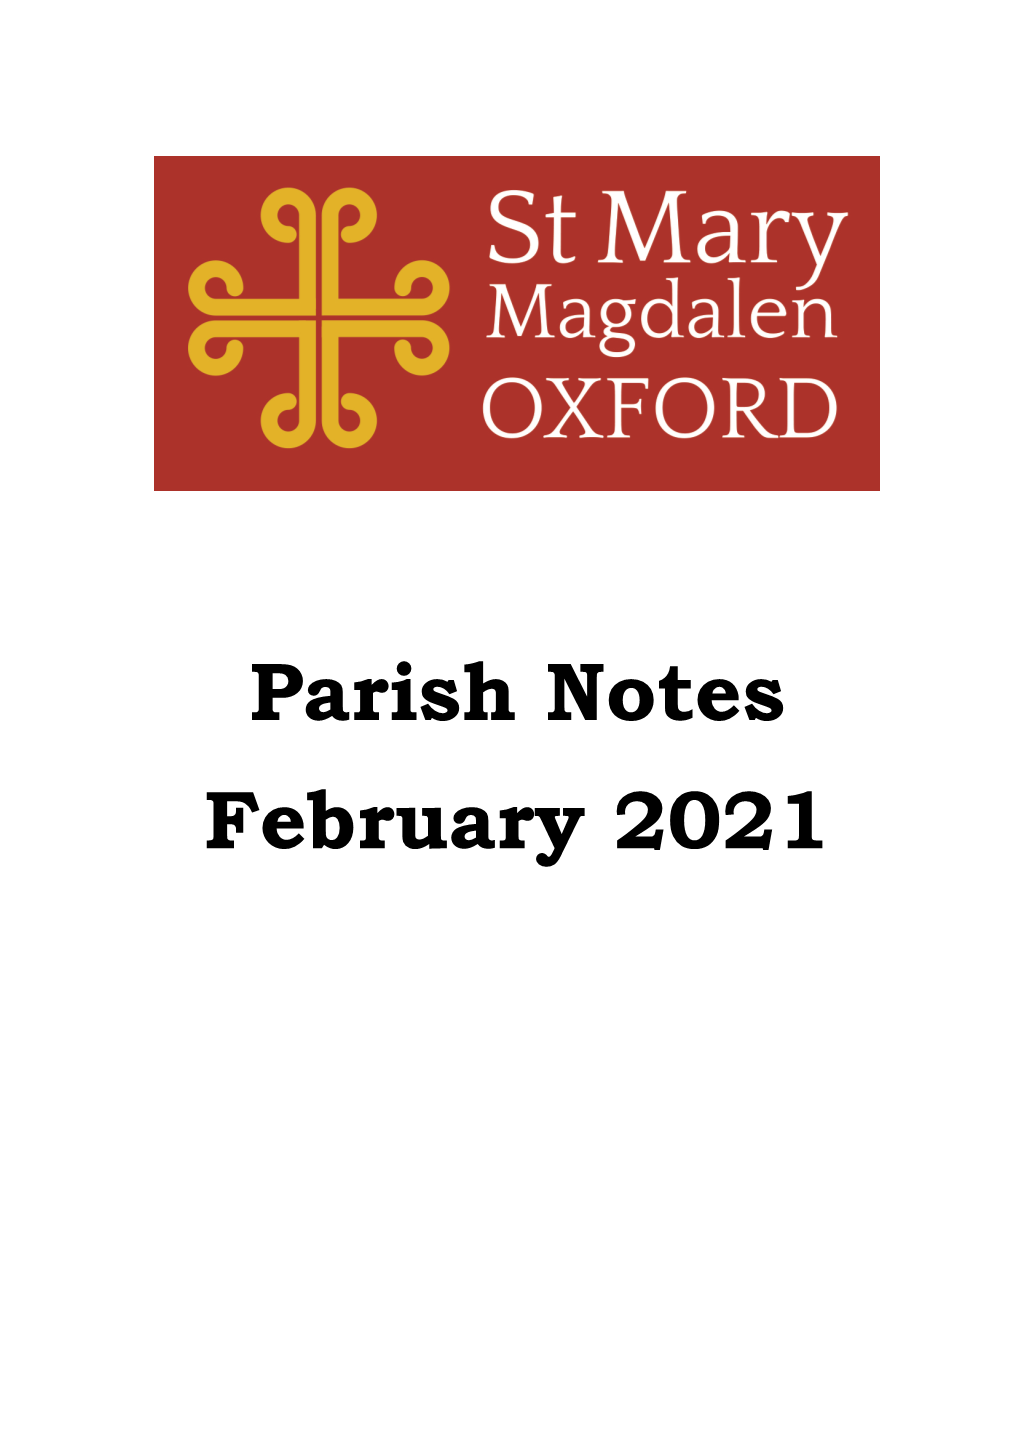 Parish Notes February 2021